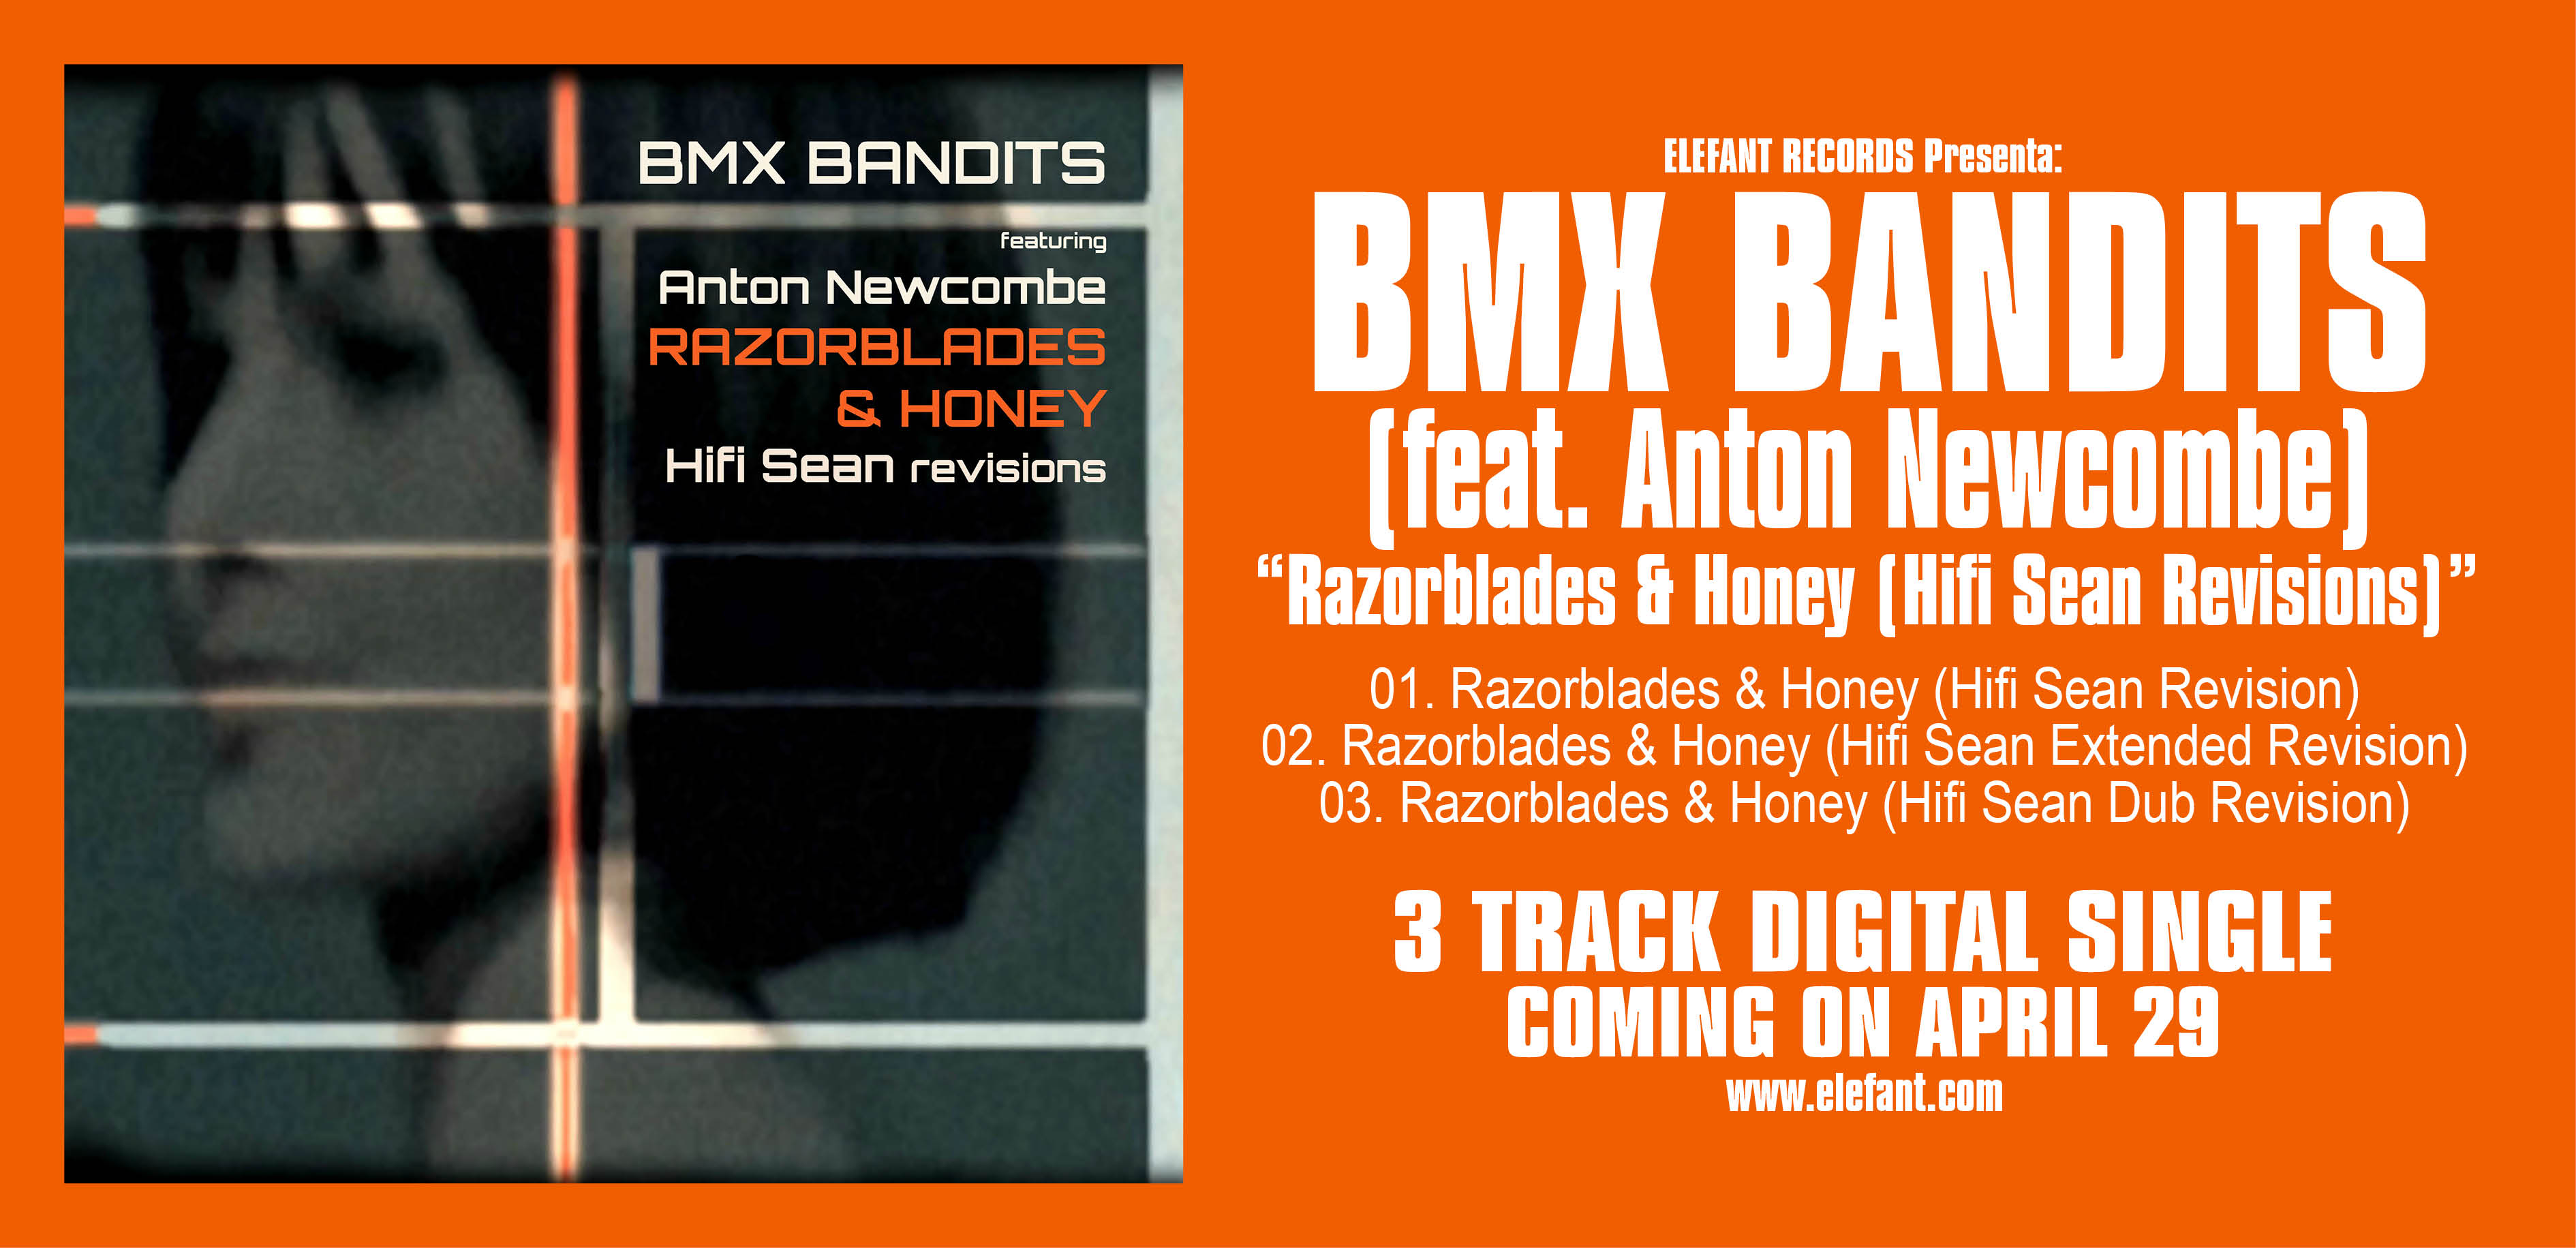 BMX BANDITS (feat. Anton Newcombe) "Razorblades & Honey (Hifi Sean Revisions)" Single Digital